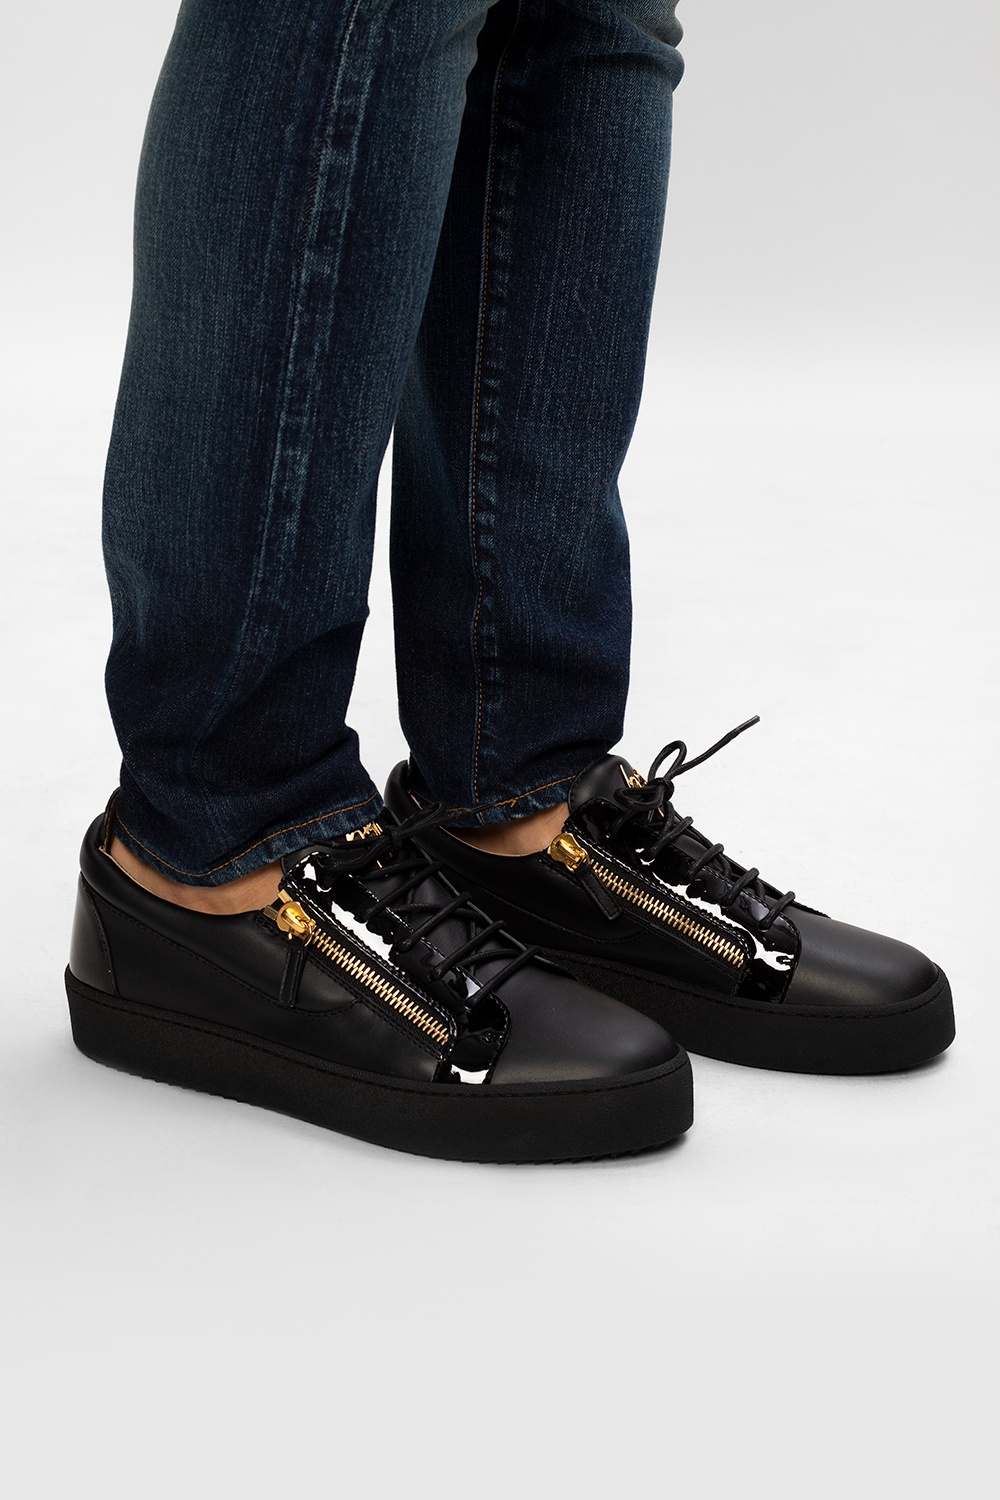 Zanotti 'Frankie' sneakers | Men's Shoes Vitkac